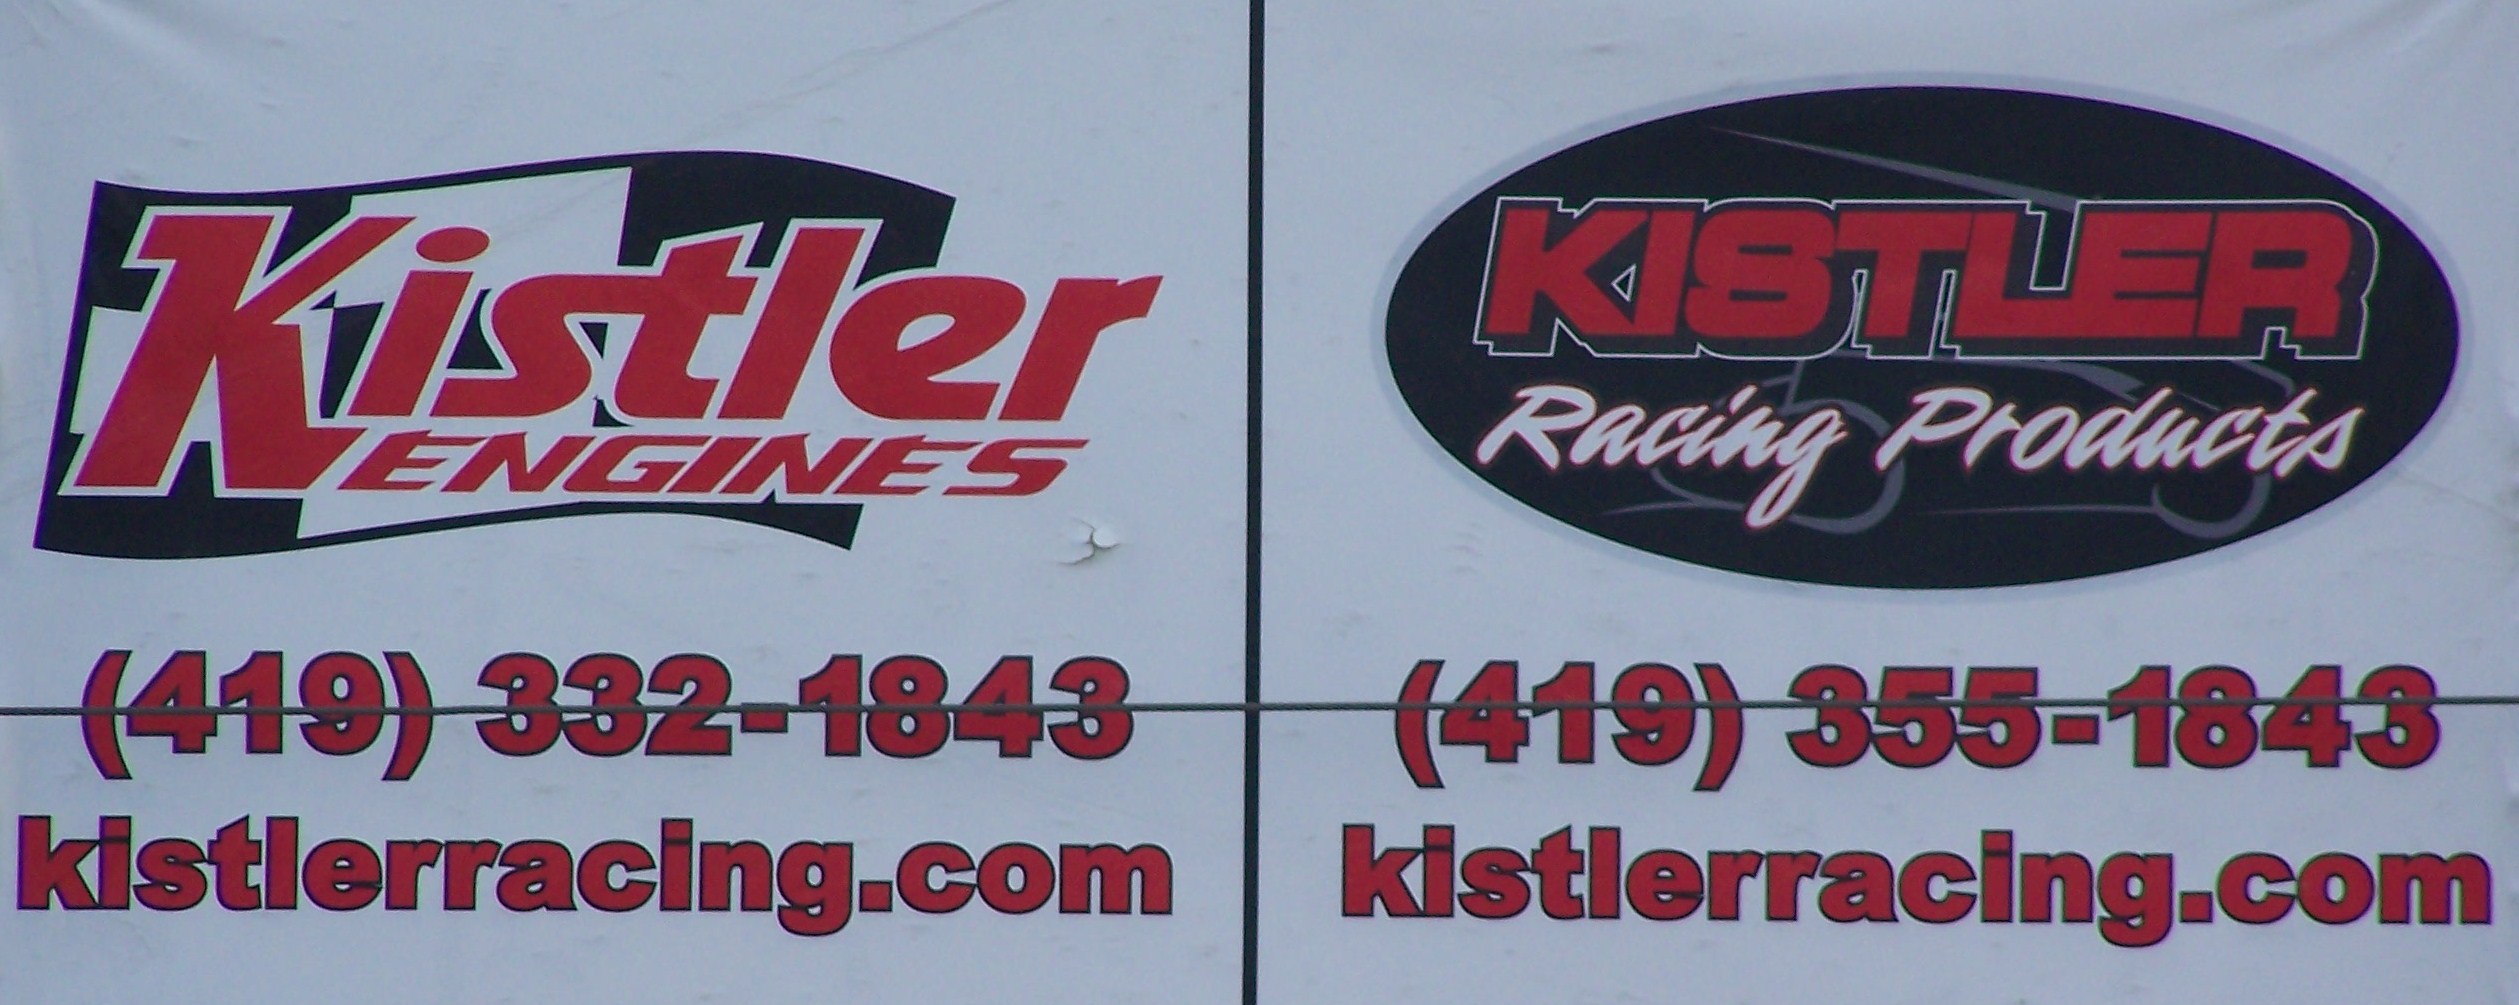 Kistler Engines & Kistler Racing Products